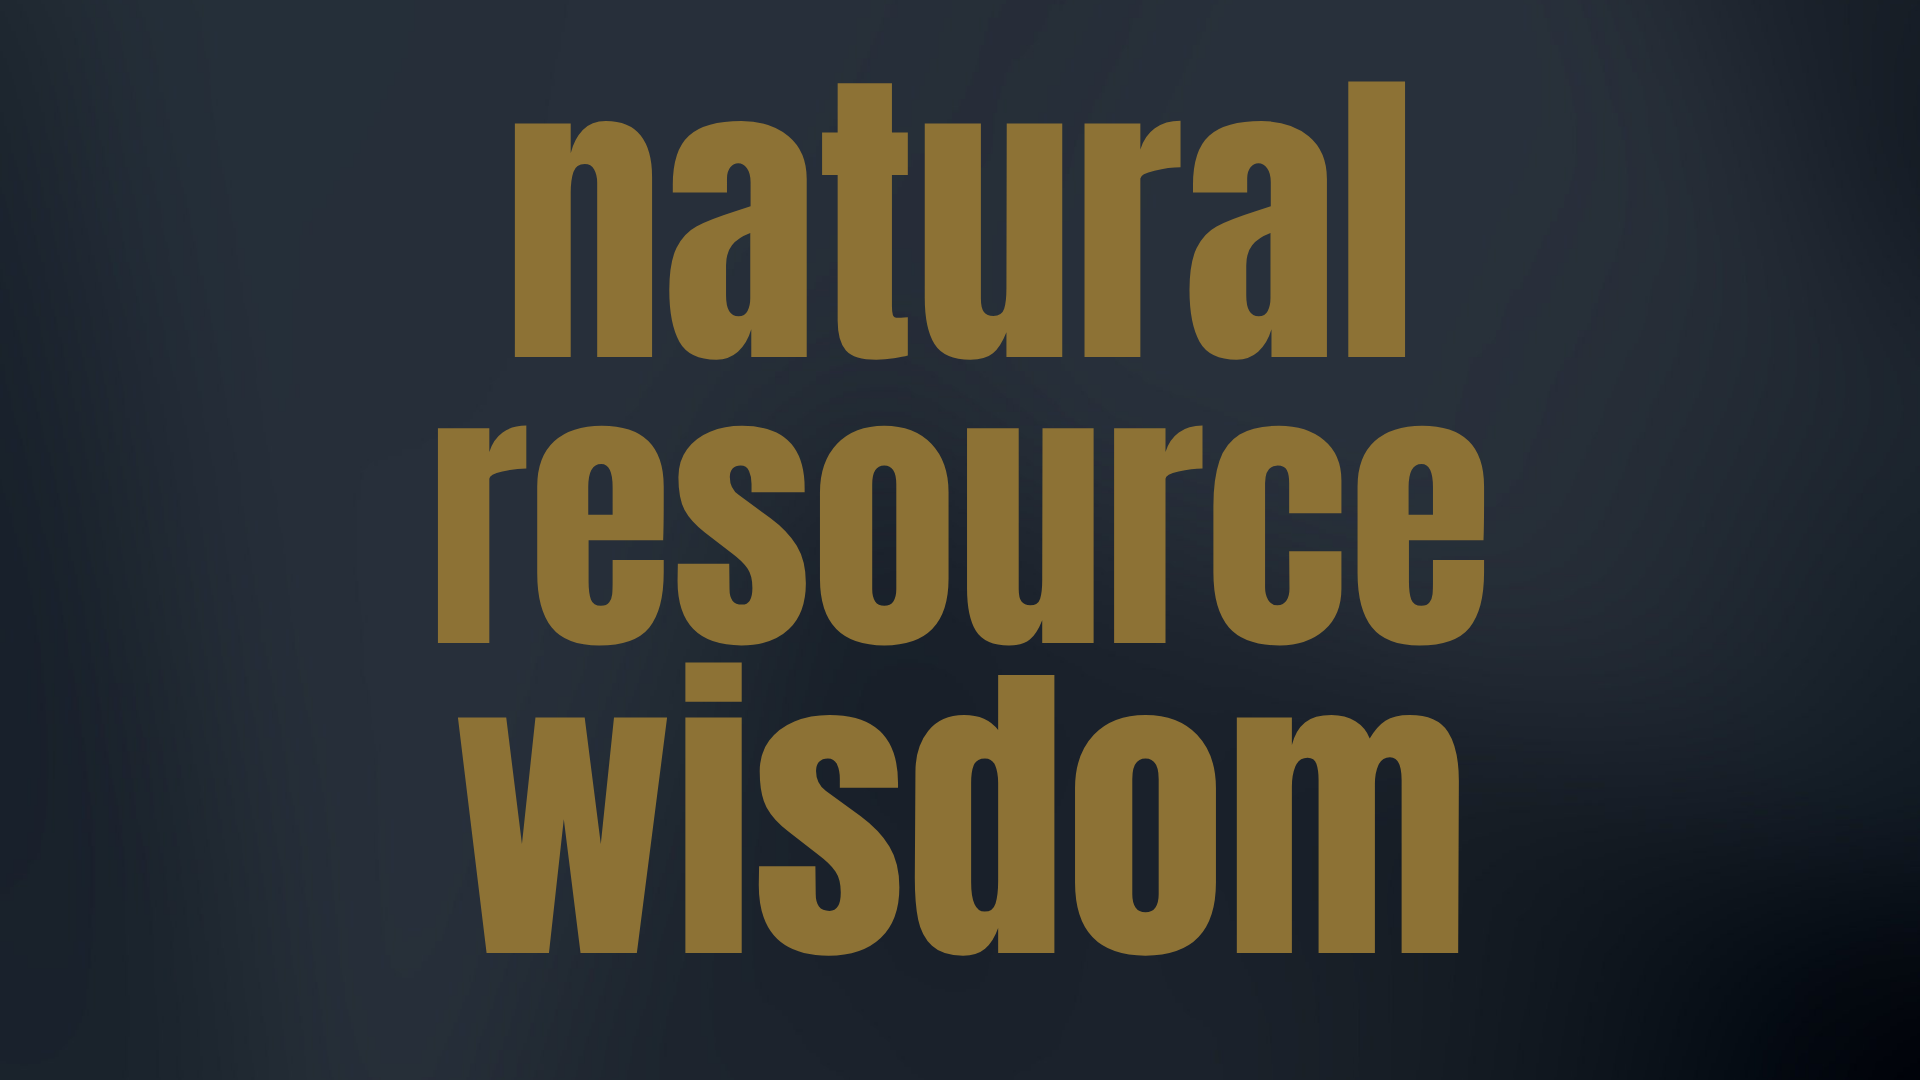 wisdom for natural resource investors